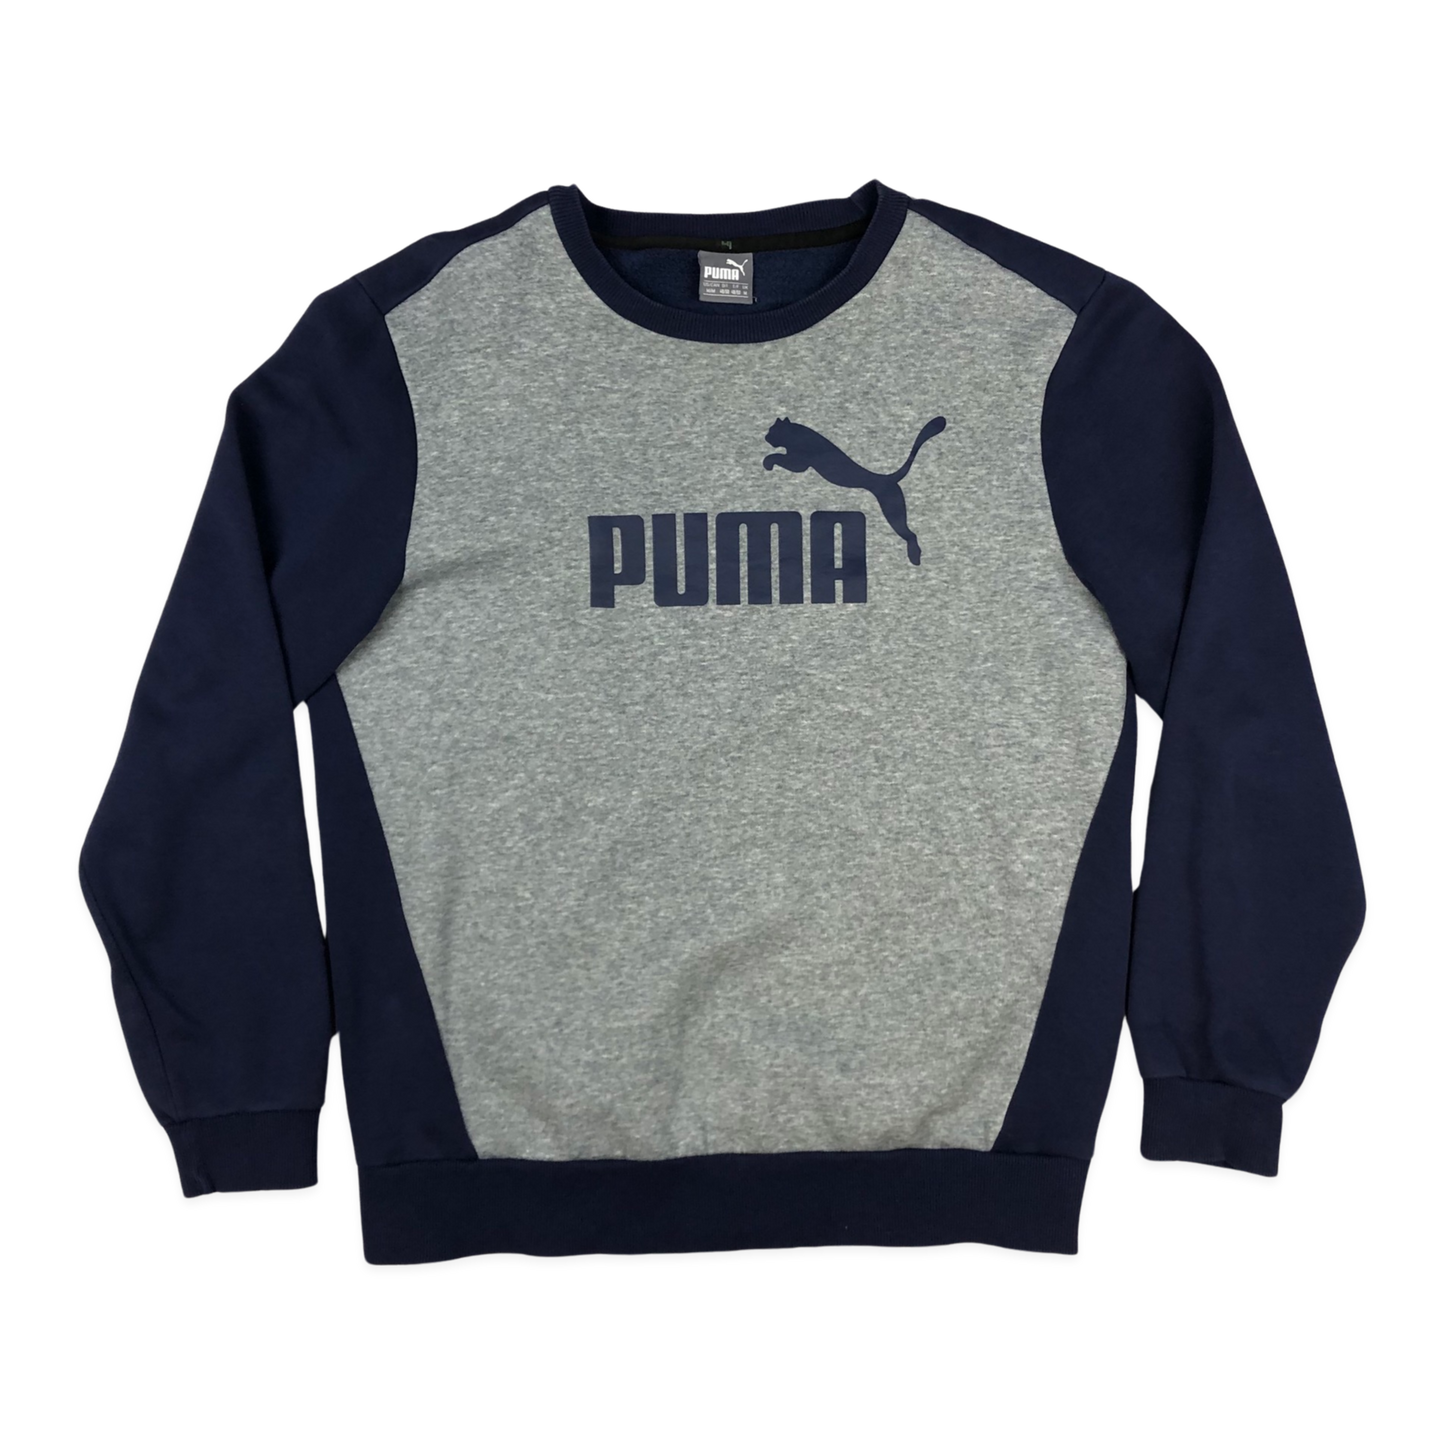 Vintage Puma Navy and Grey Sweatshirt L